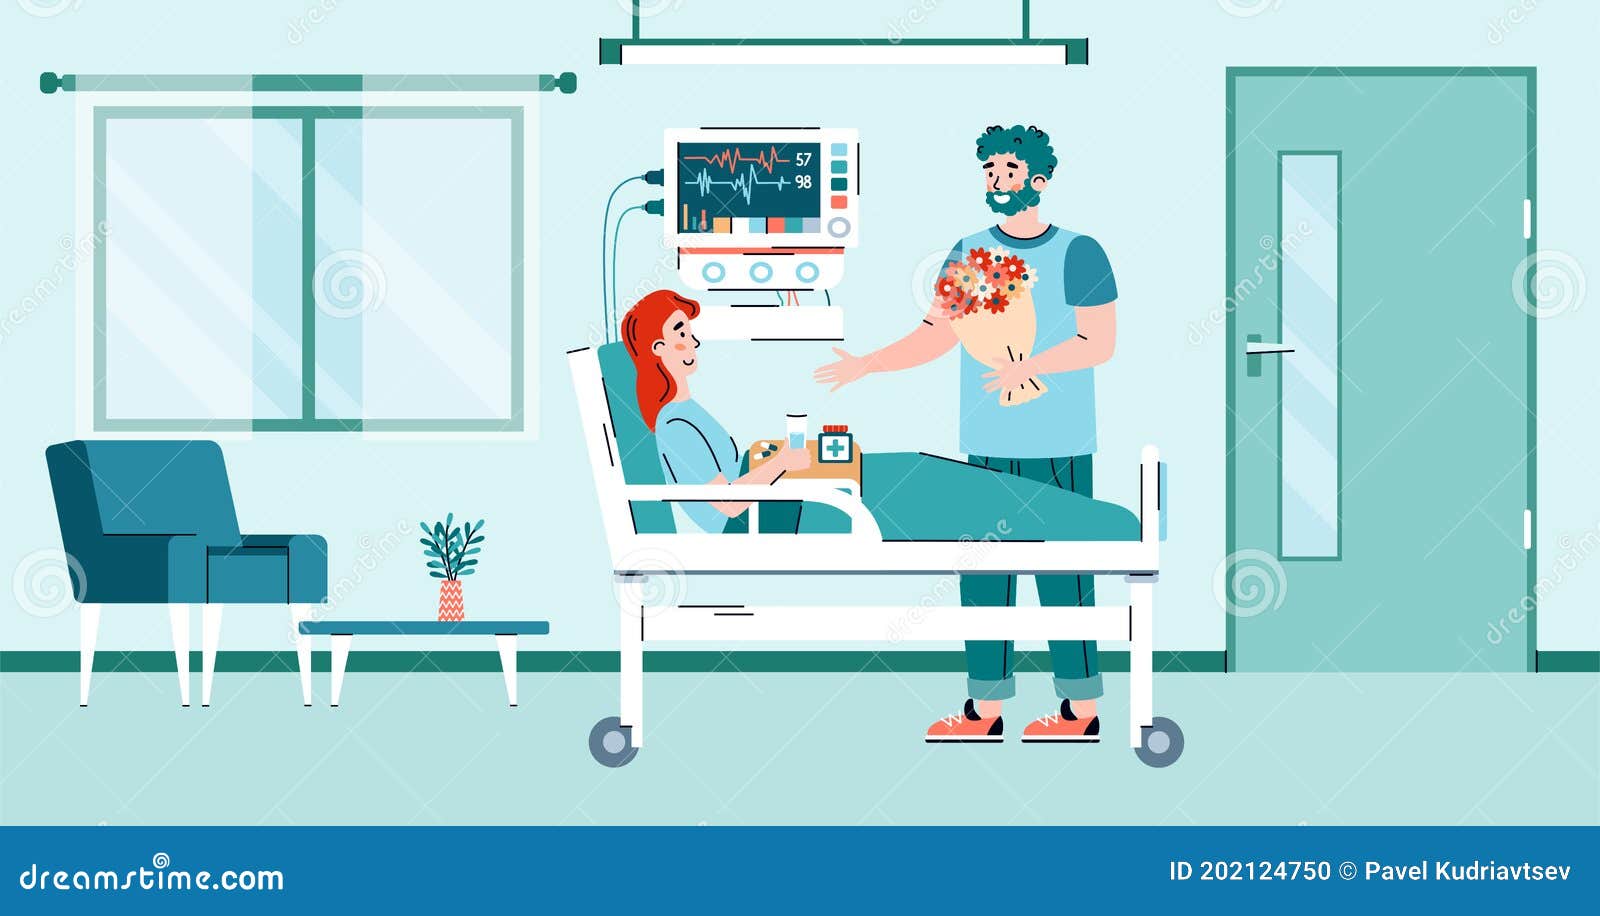 man visits convalescent patient in a hospital room, cartoon  .